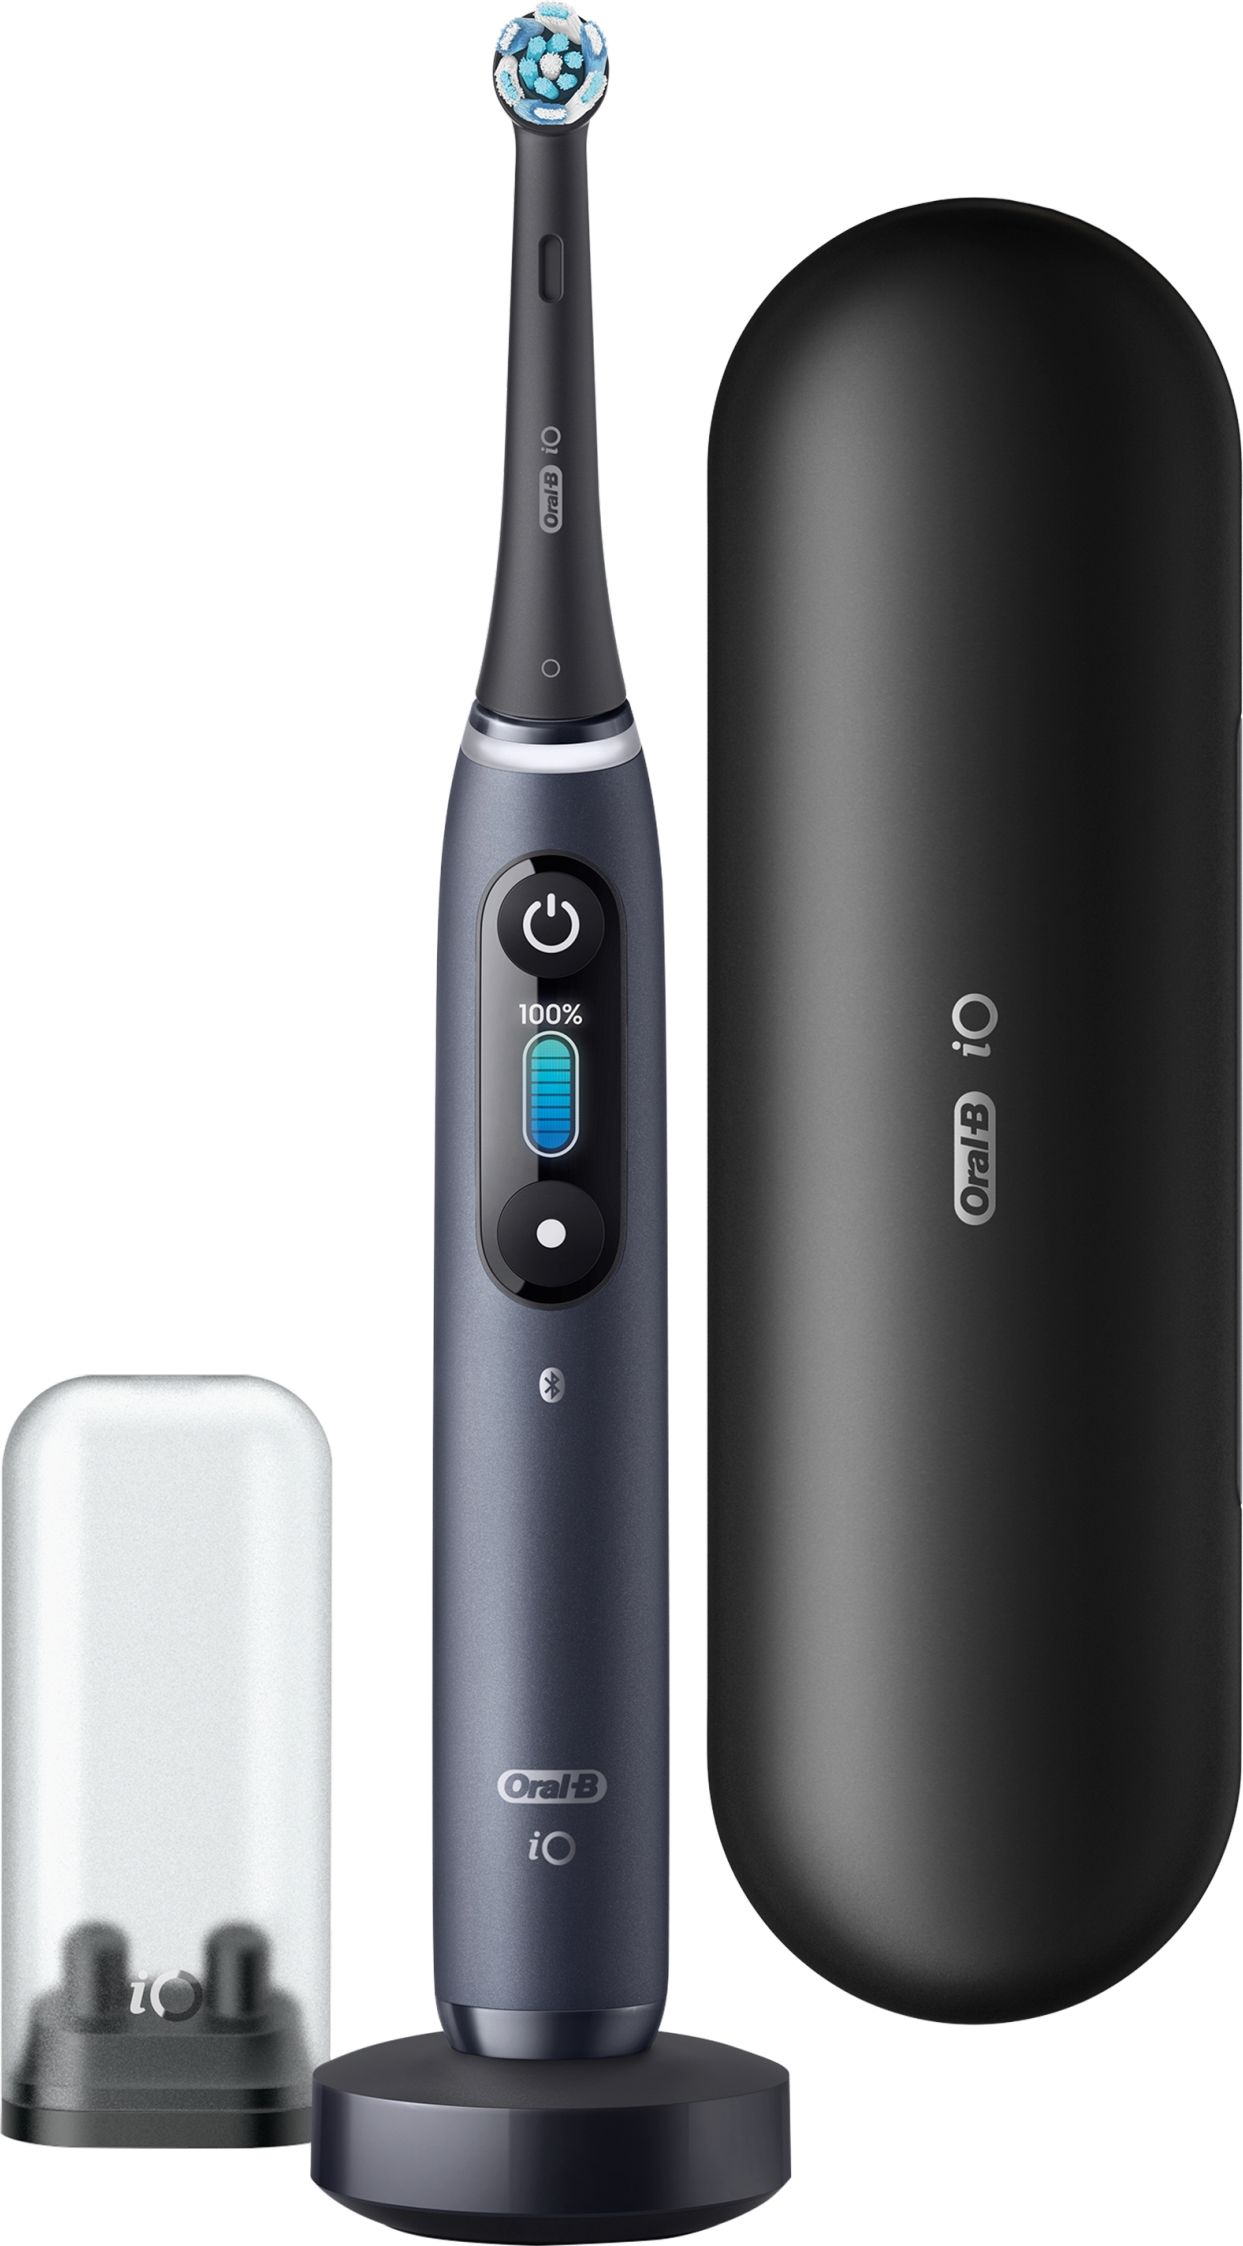 Oral B iO 8 Electric Toothbrush - Black, Black